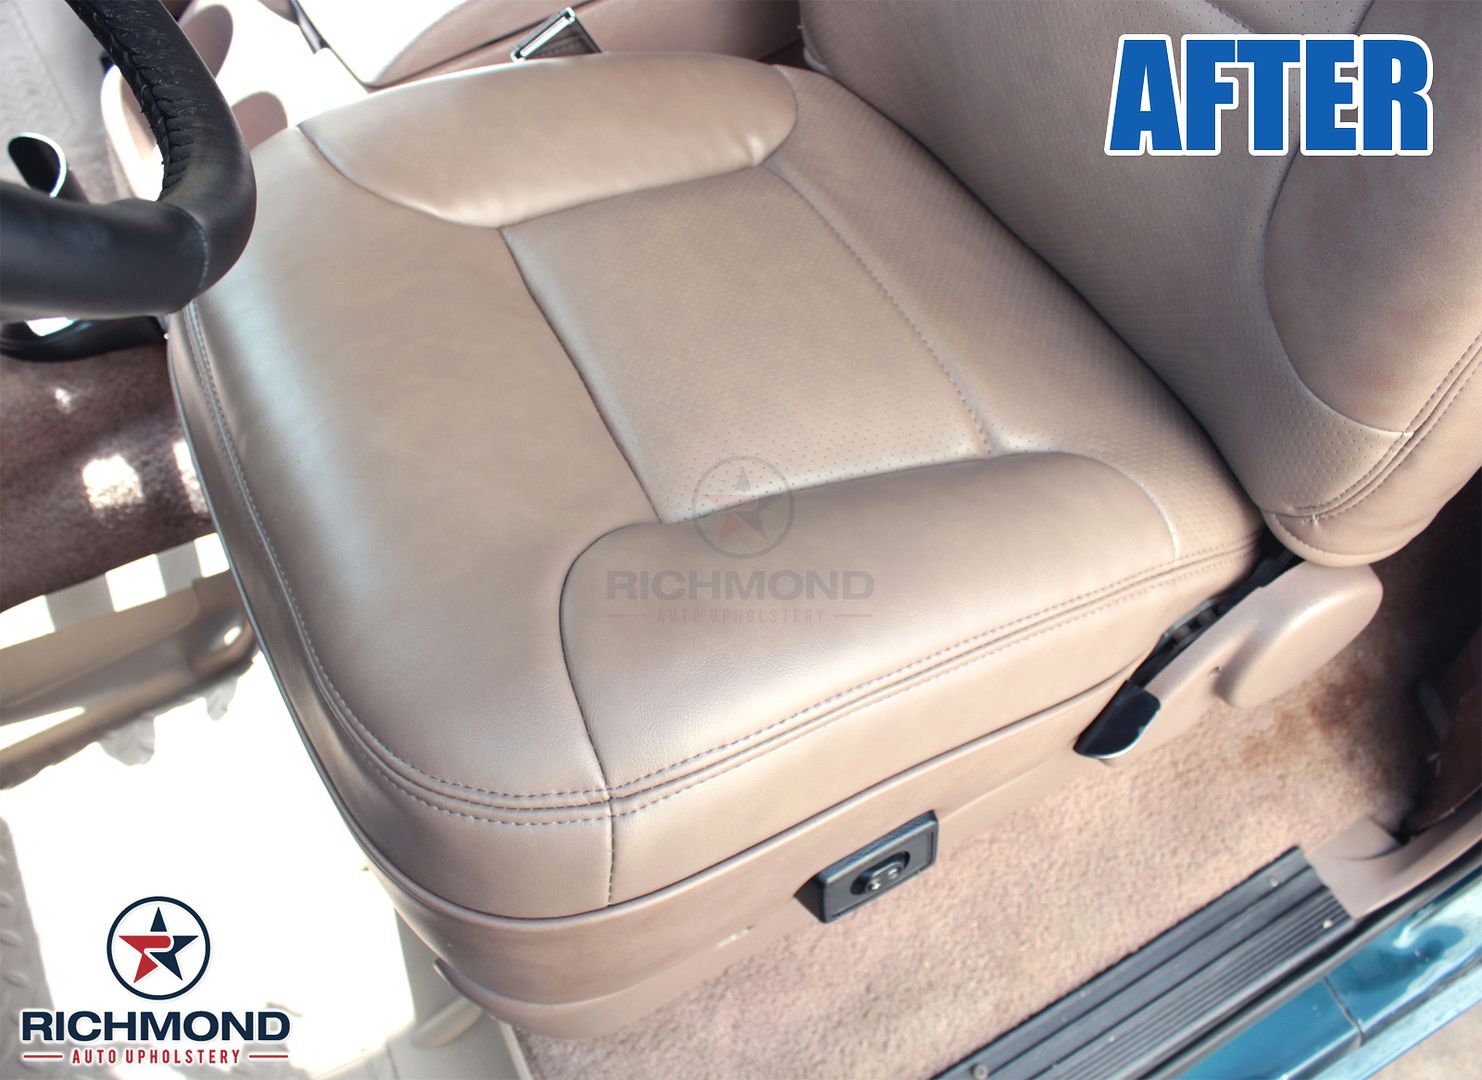  photo 1992-1993-1994-1995-1996-Ford-Bronco-Driver-Side-Bottom-Leather-Seat-Cover-
Installed2_zpslibnxhkk.jpg